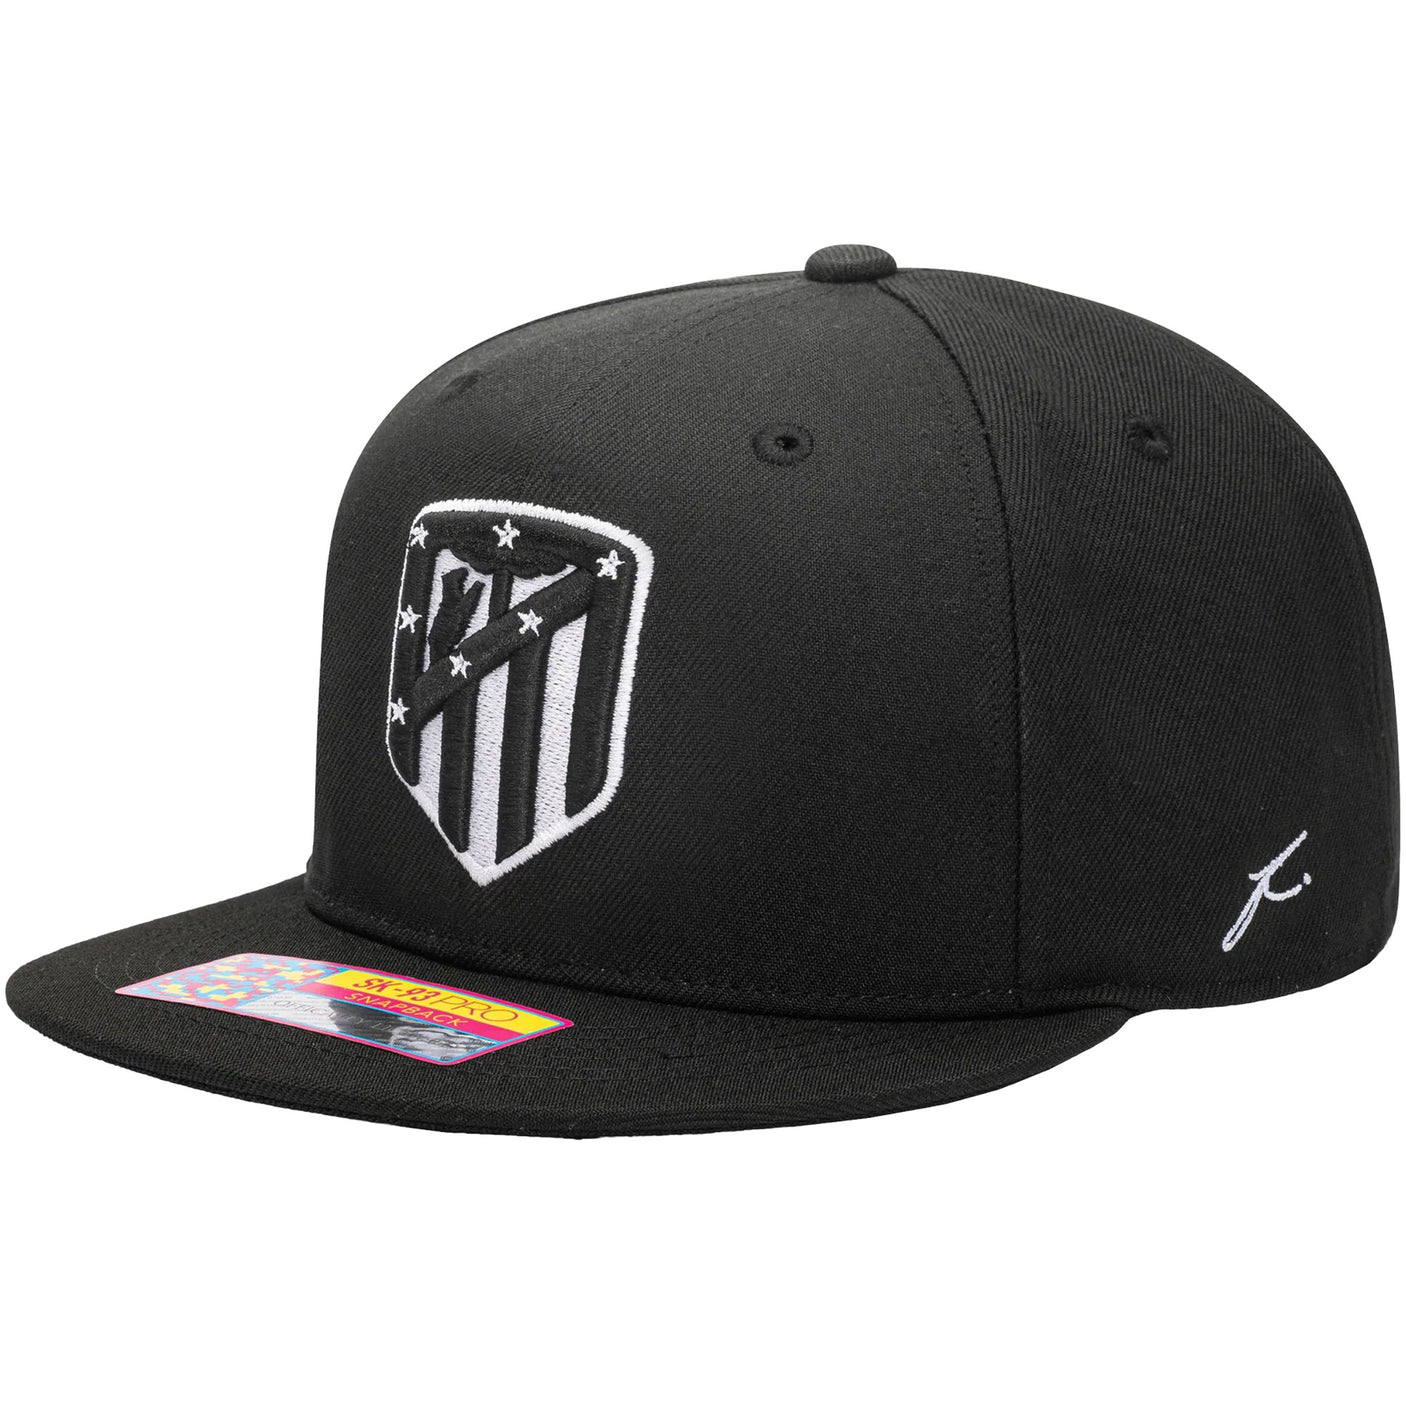 Fan Ink Atletico Madrid Snap Back Hat Black/Silver Left